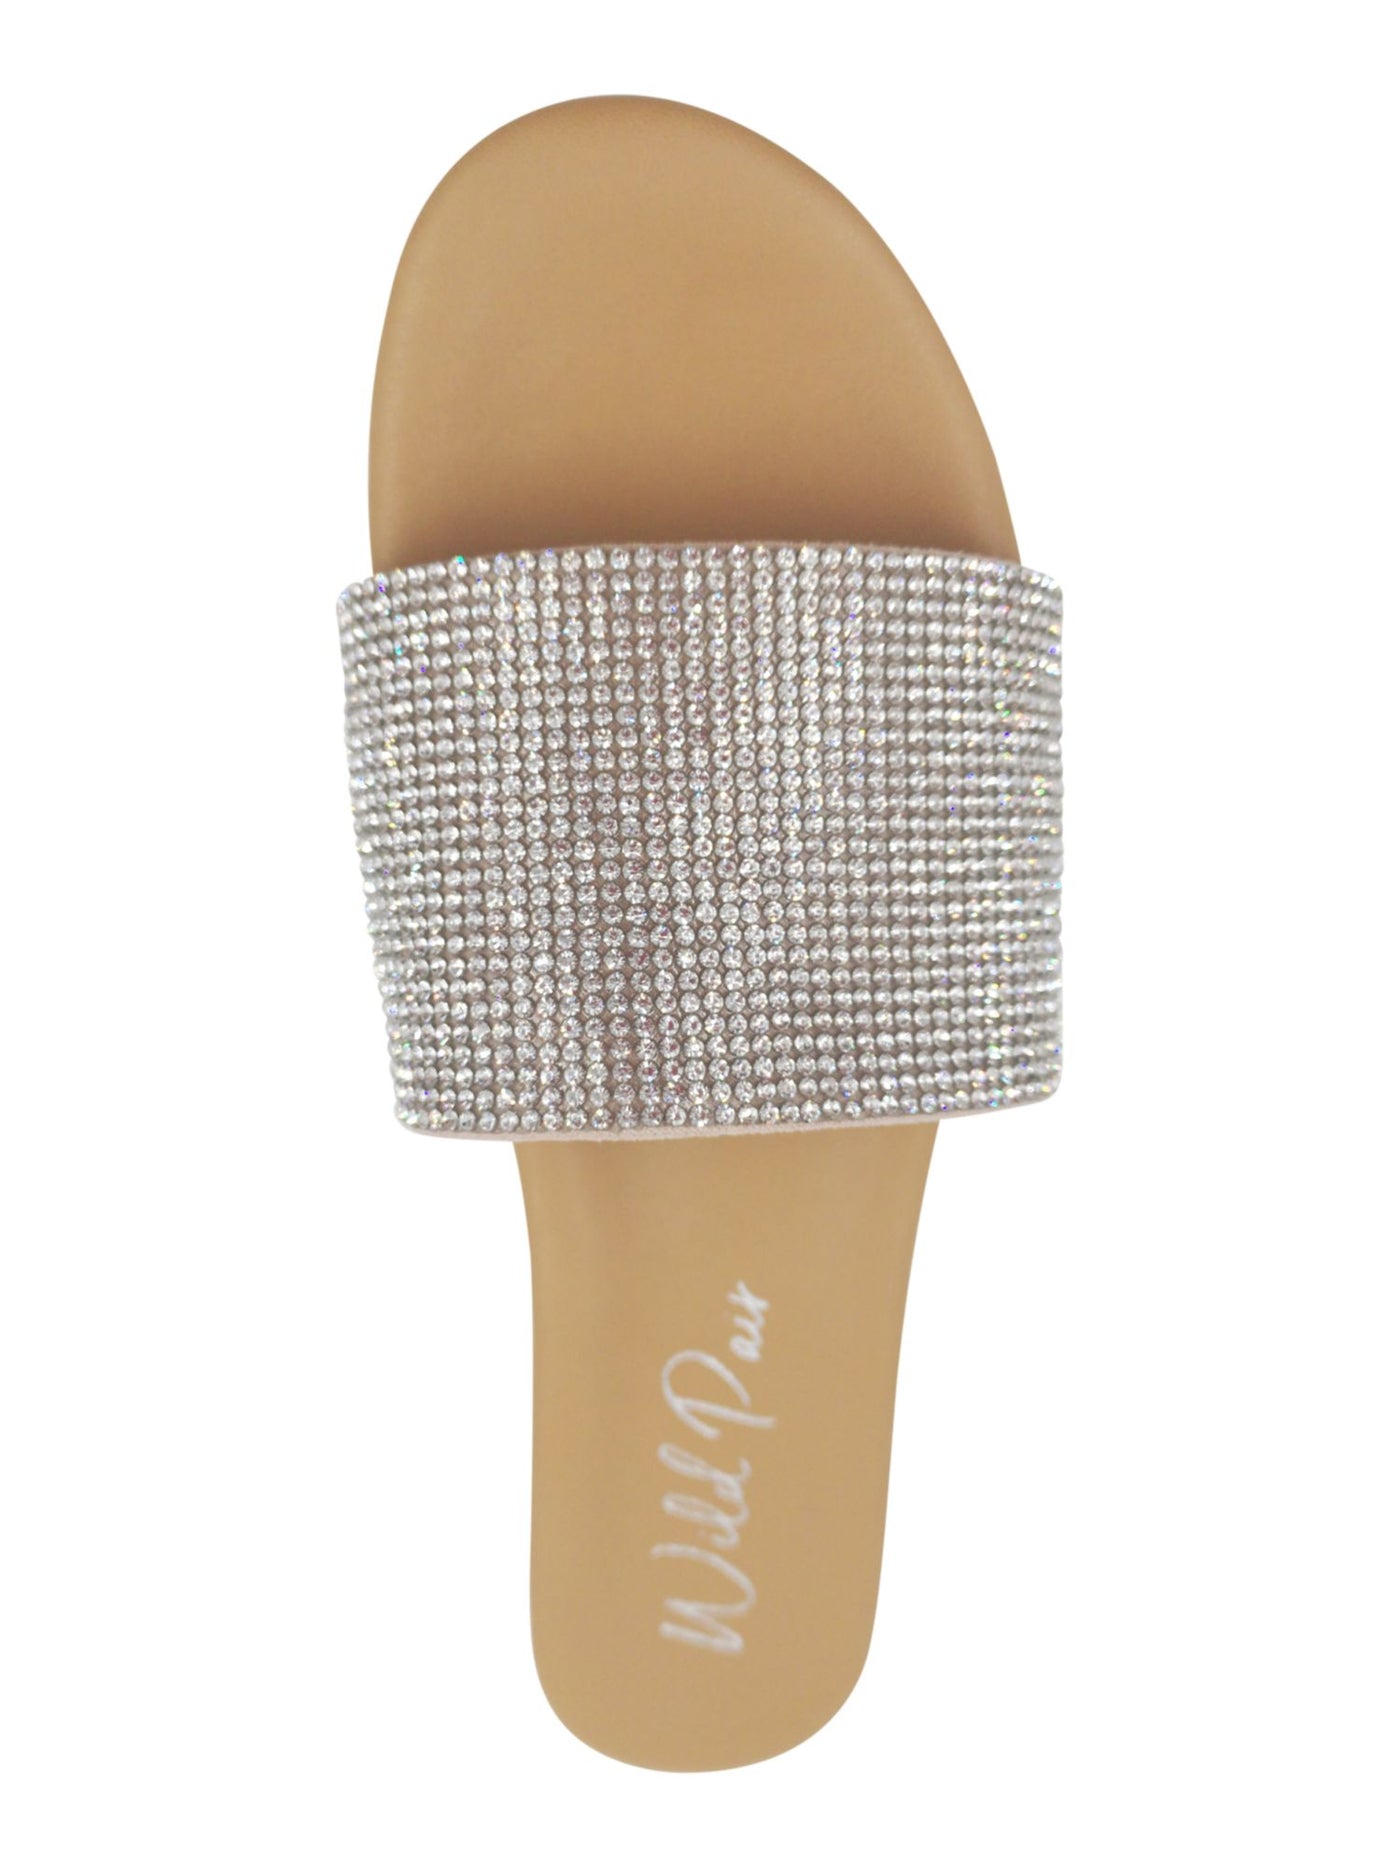 WILD PAIR Womens Silver Stone Embellishment Safirah Round Toe Slip On Slide Sandals Shoes 8.5 M